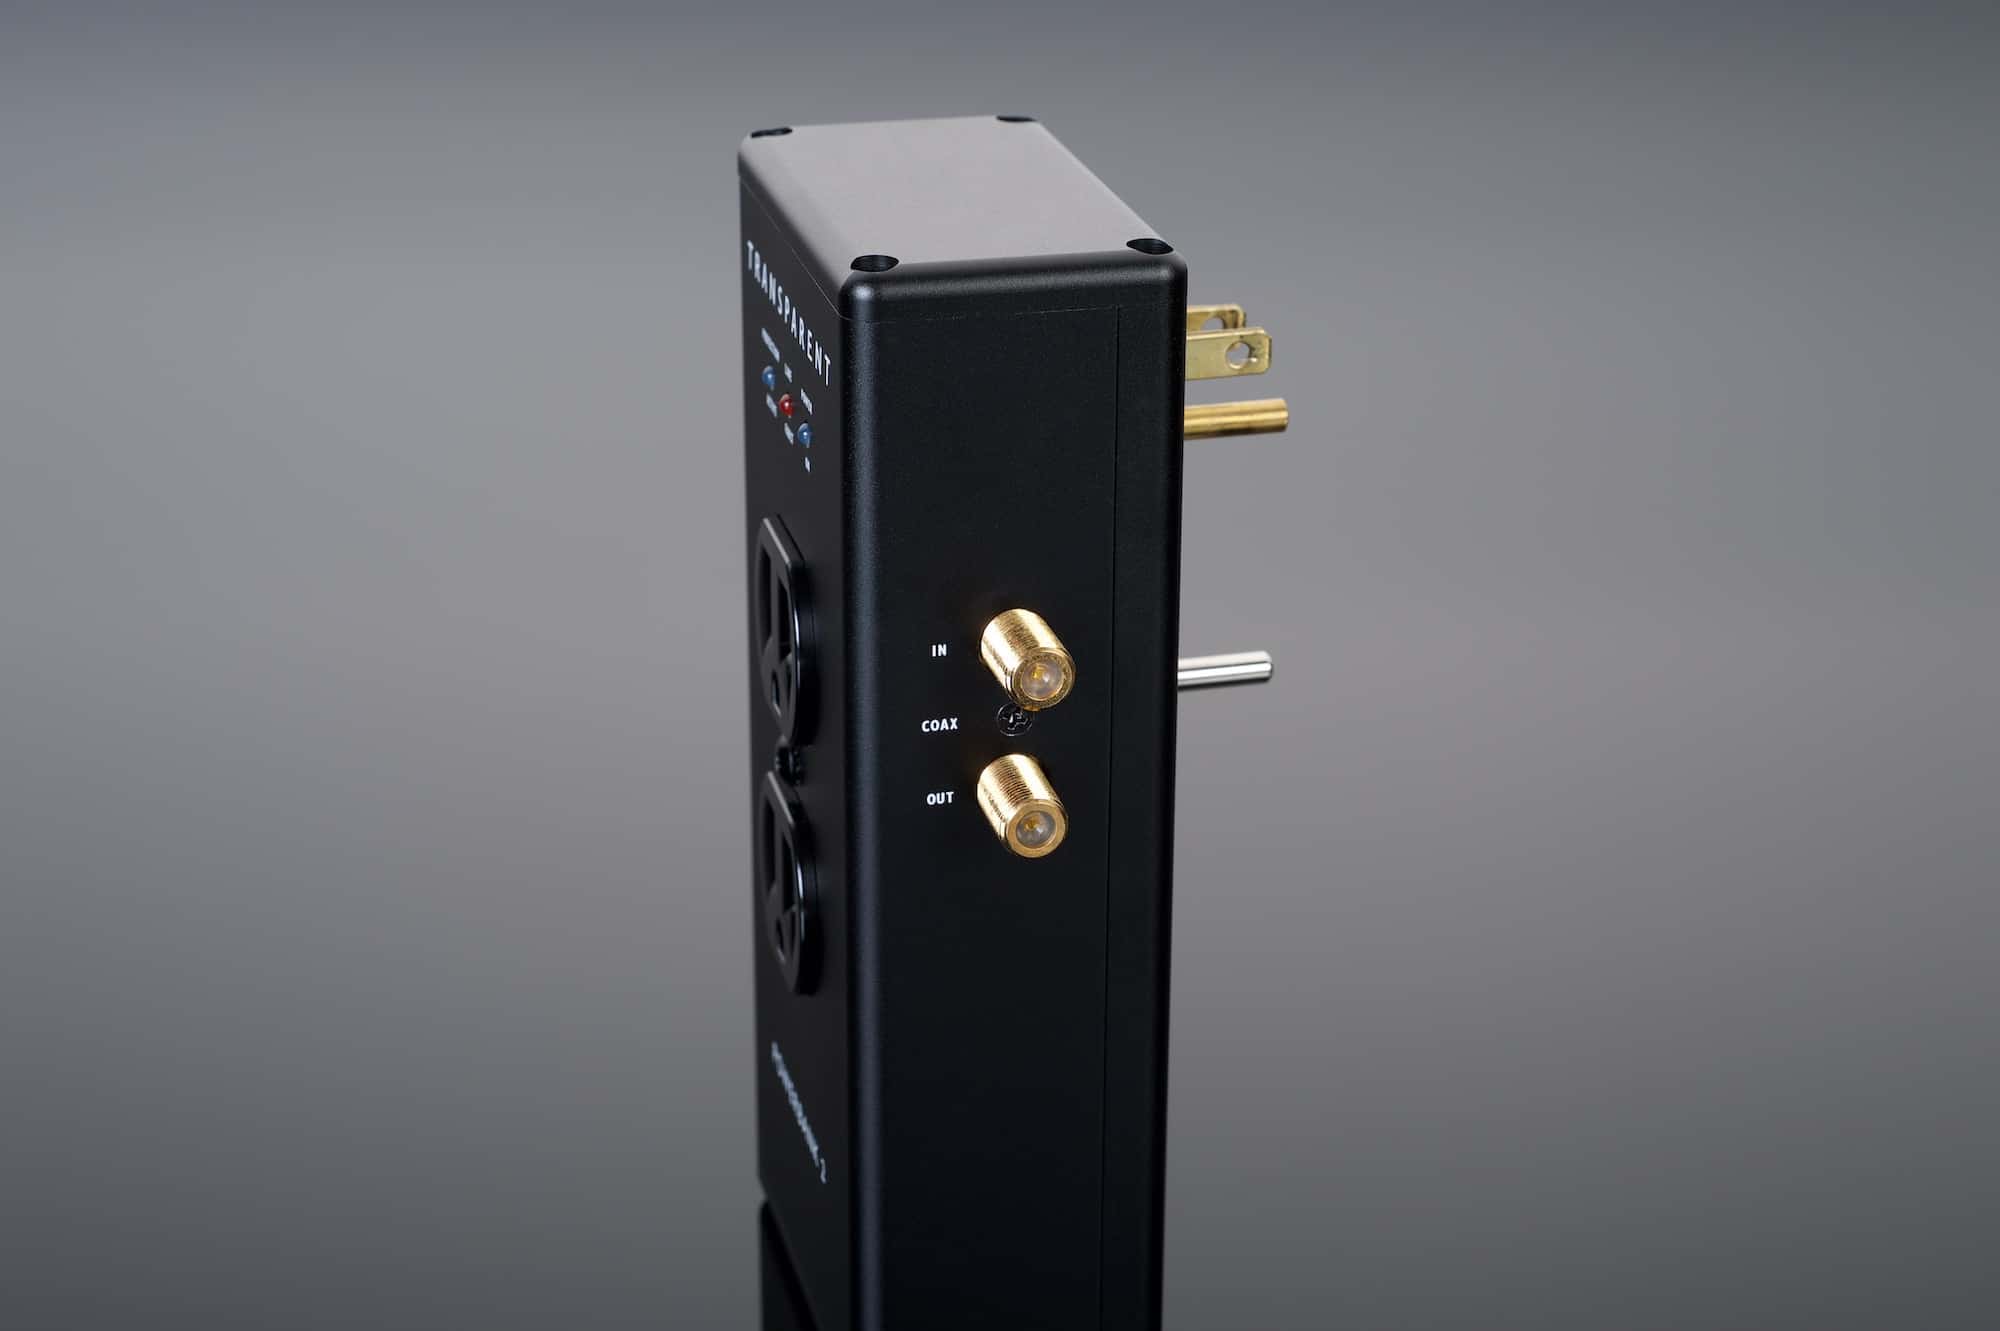 Transparent PowerBank 2 Power Conditioner | Transparent Cables | Paragon Sight & Sound